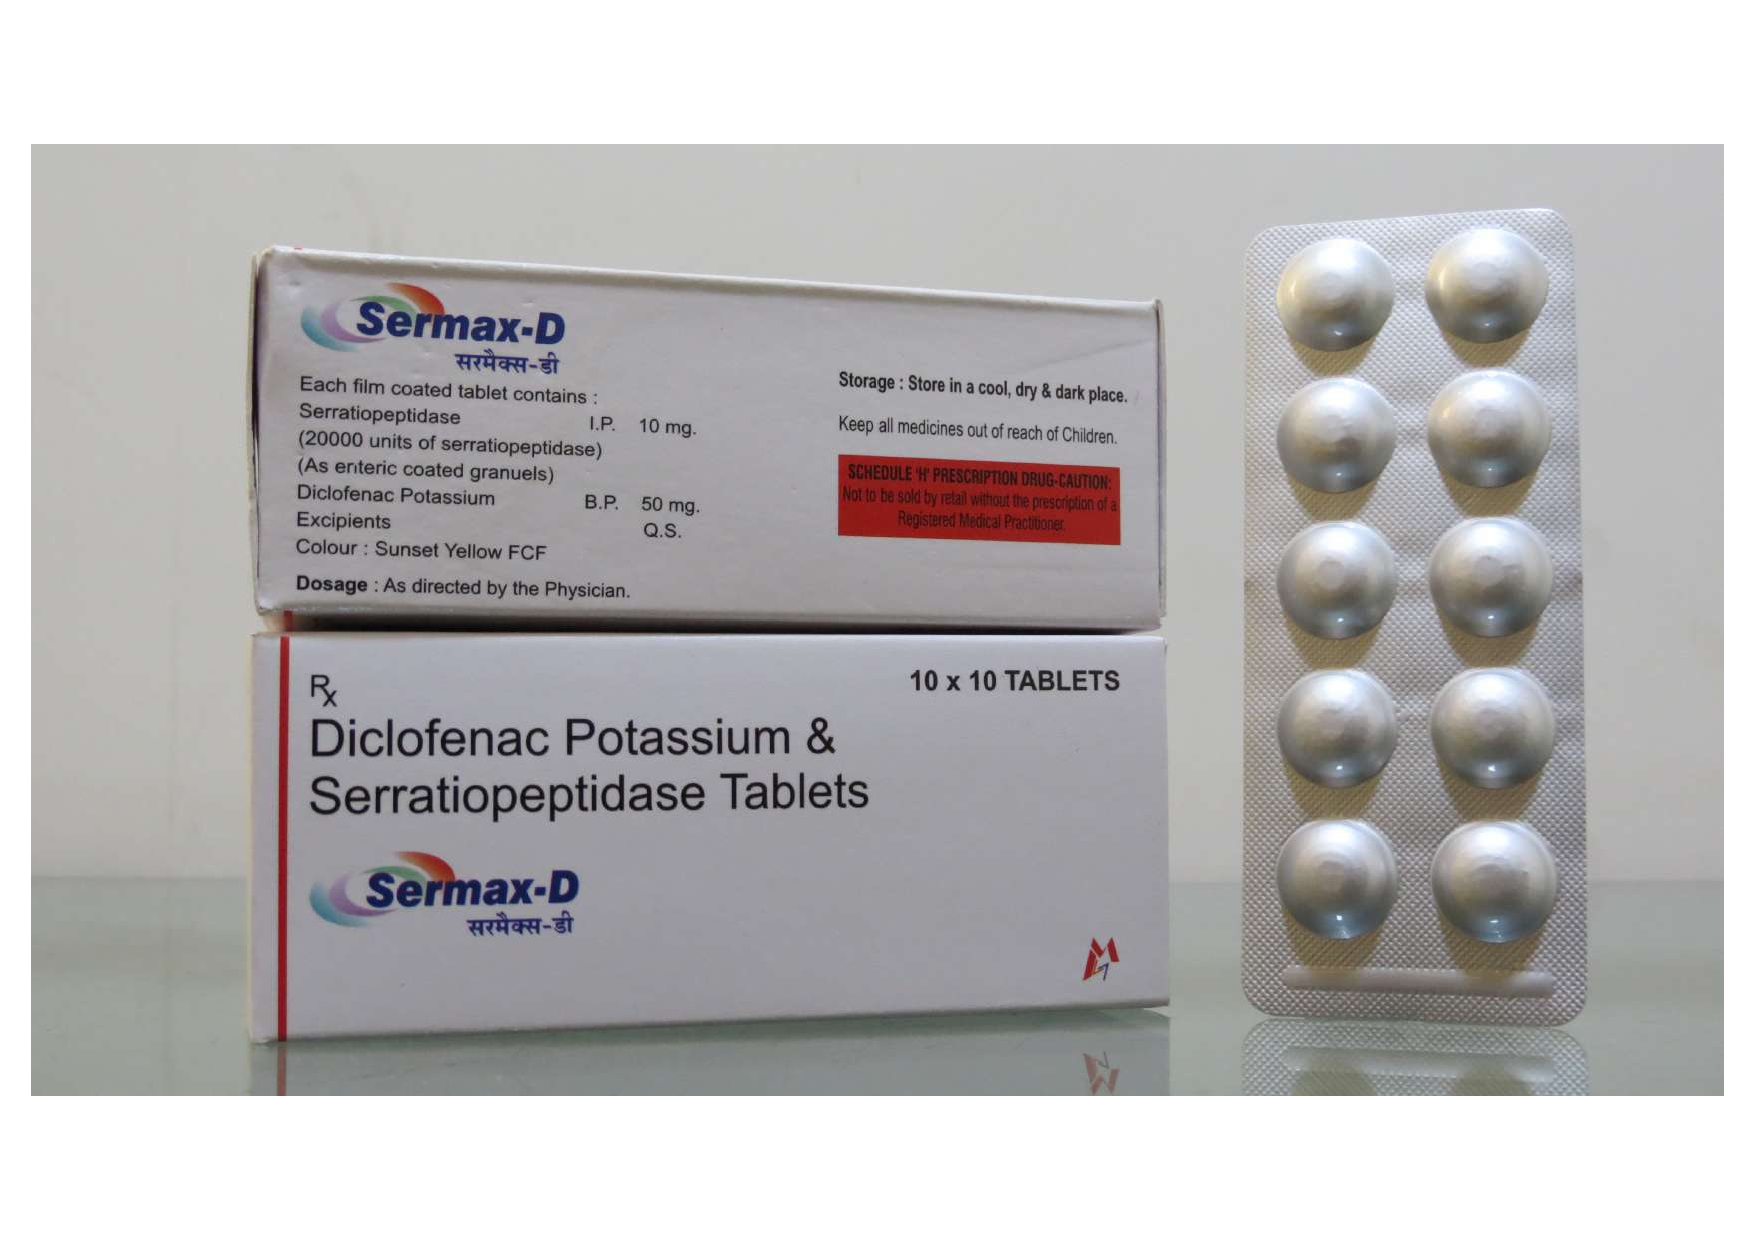 diclofenac potassium bp 50mg +
serratiopeptidase 10mg (as enteric coated granuels) tablets